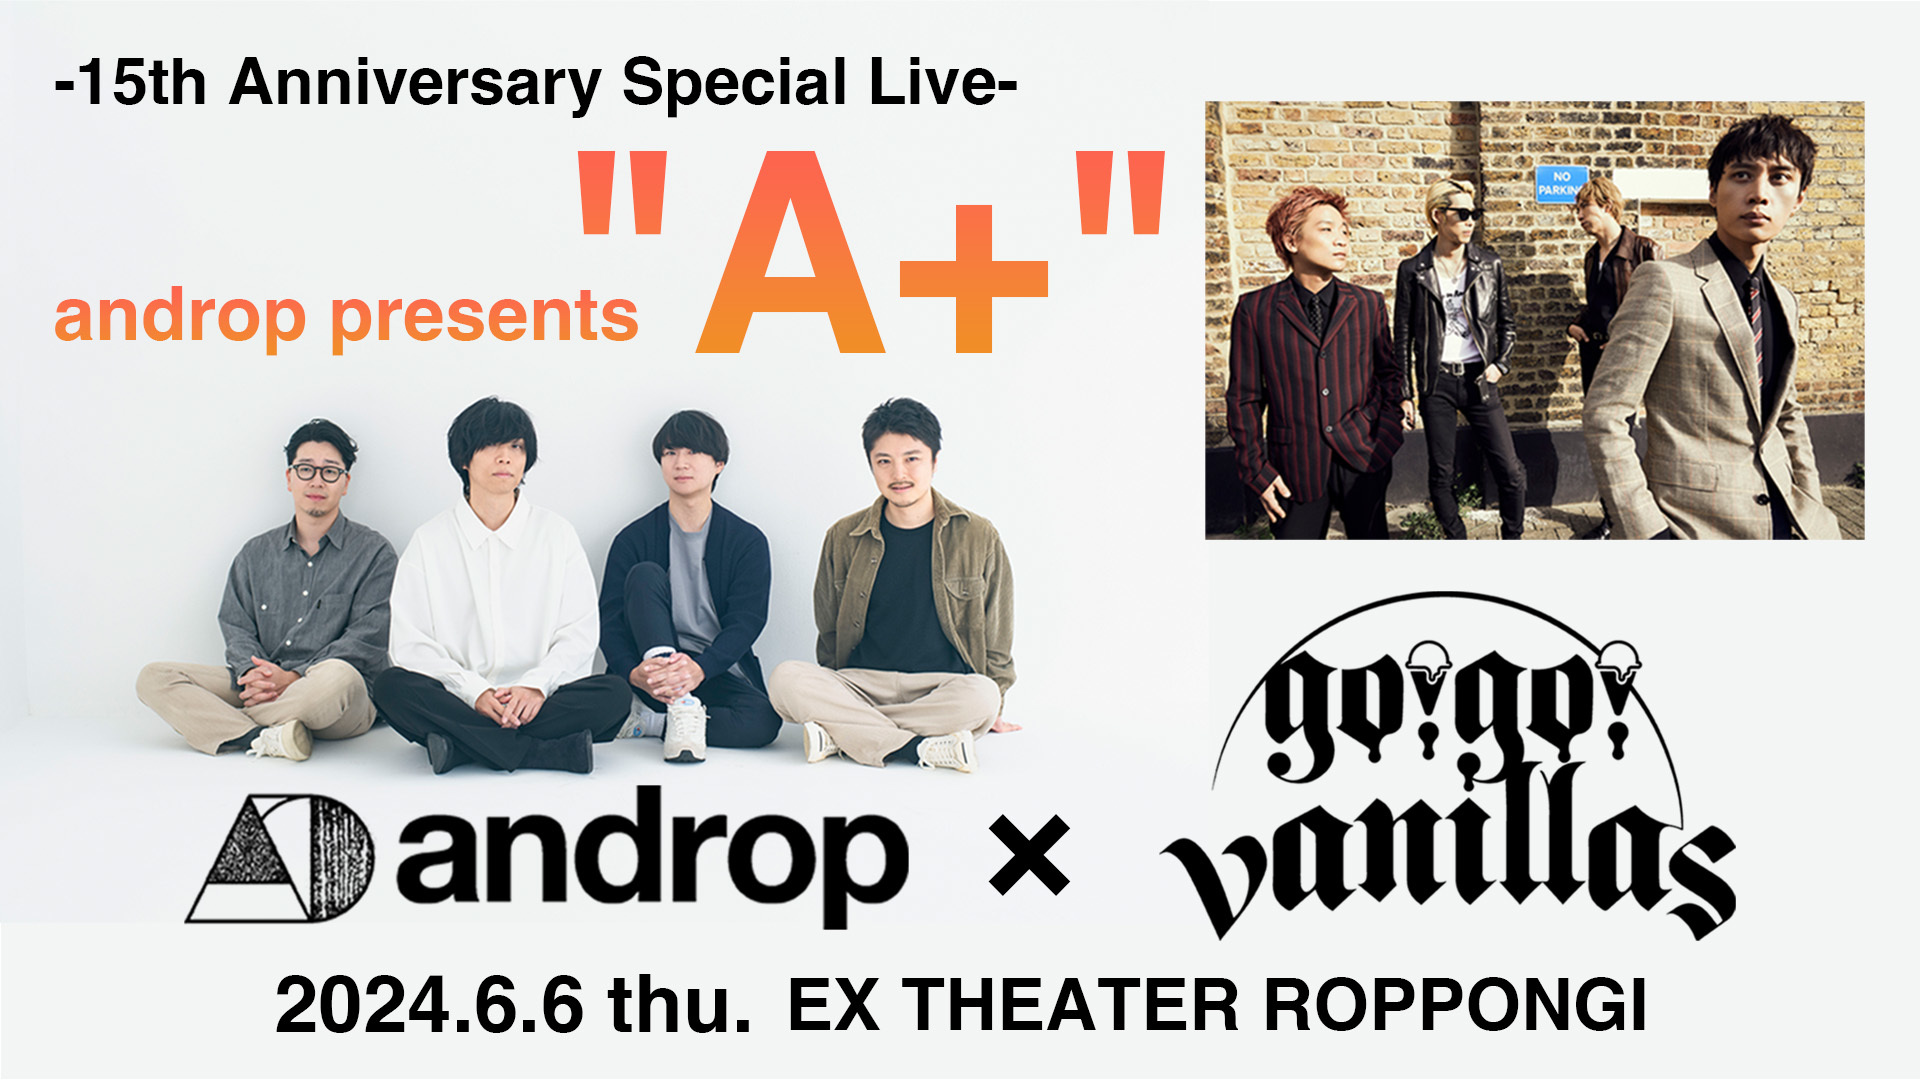 『-15th Anniversary Special Live- androp presents "A+"「androp ✕ go!go!vanillas」』